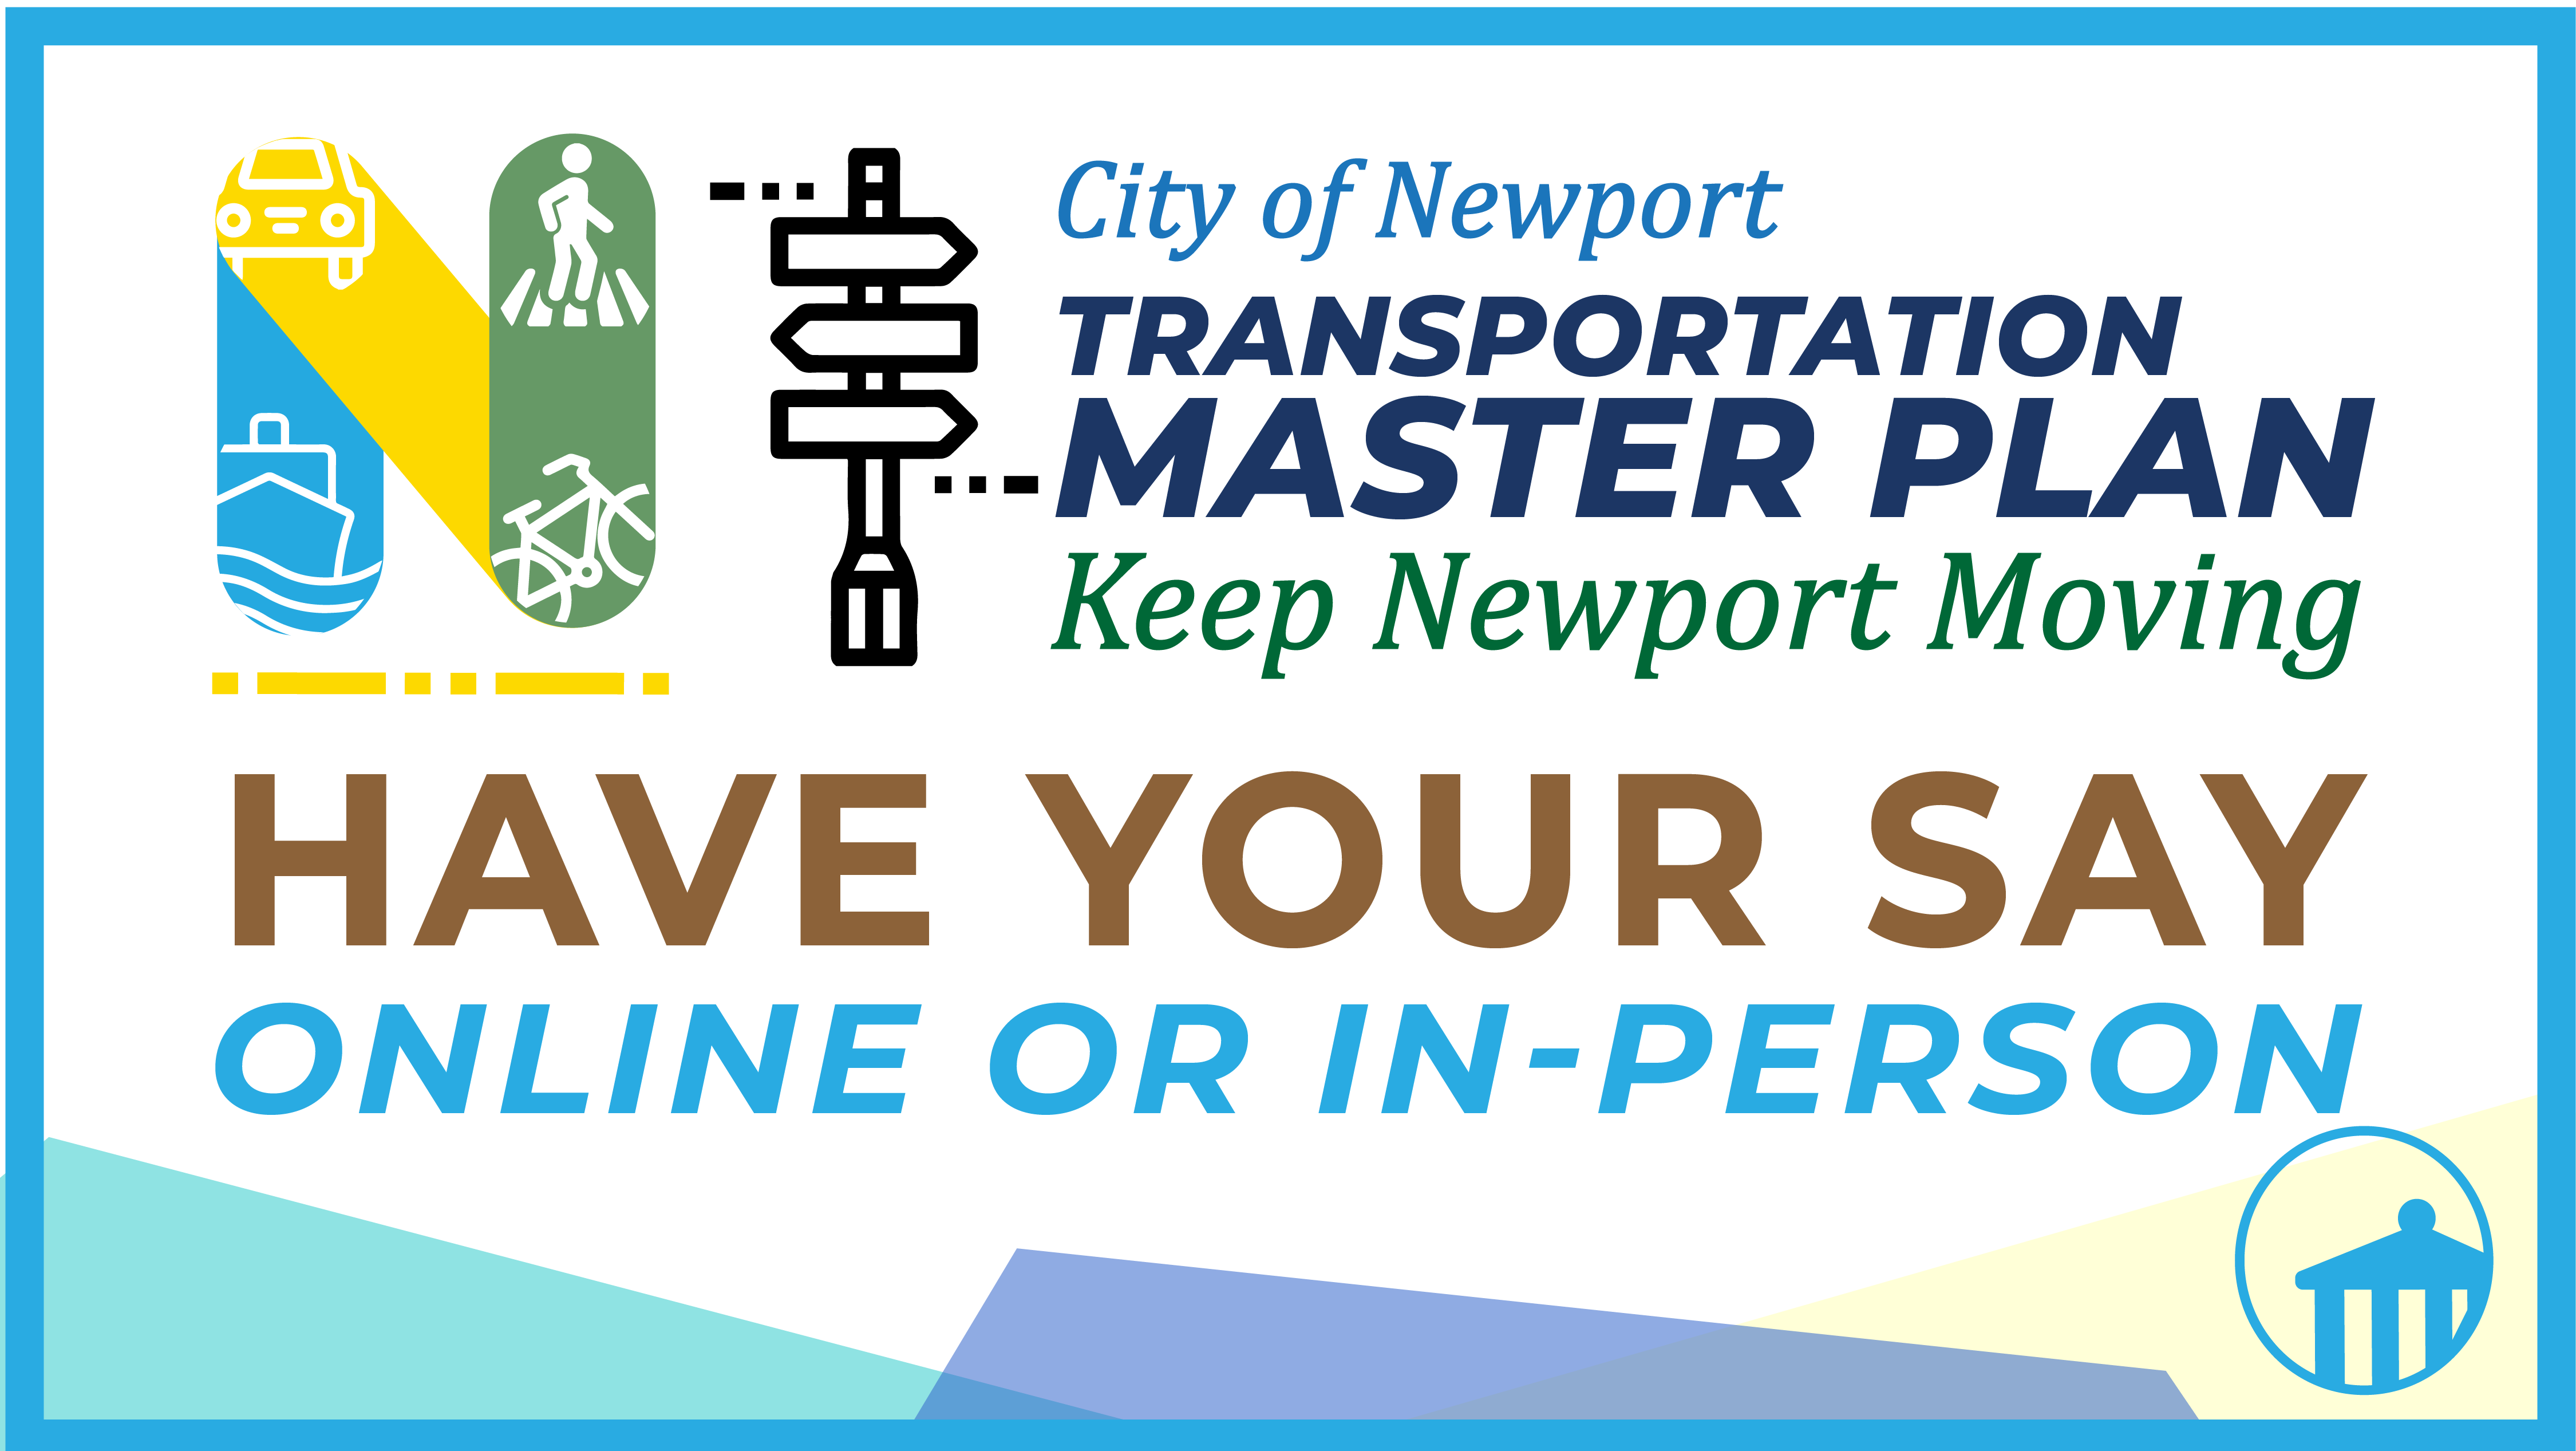 Help Keep Newport Moving!